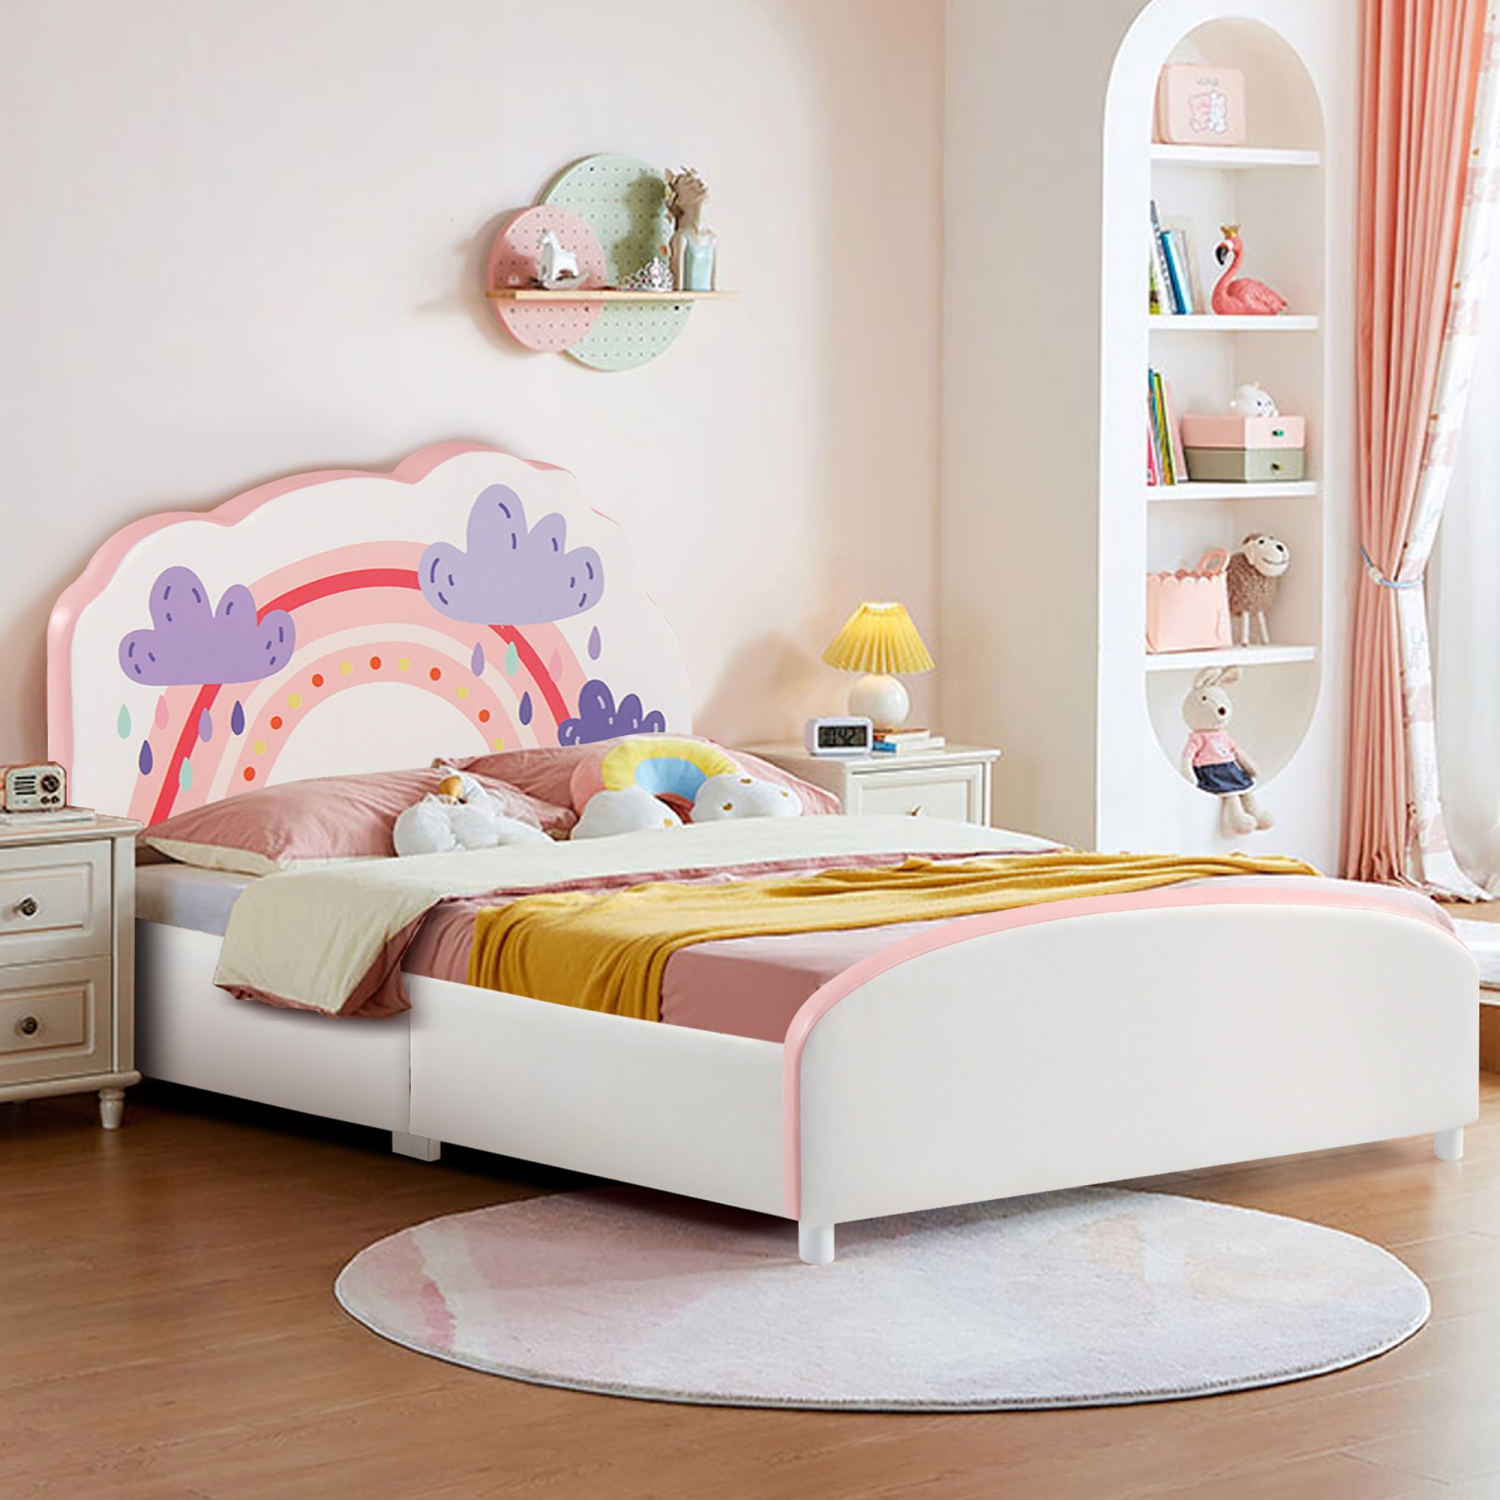 Costway Kids Upholstered Platform Bed Children Twin Size Wooden Bed Rainbow Pattern